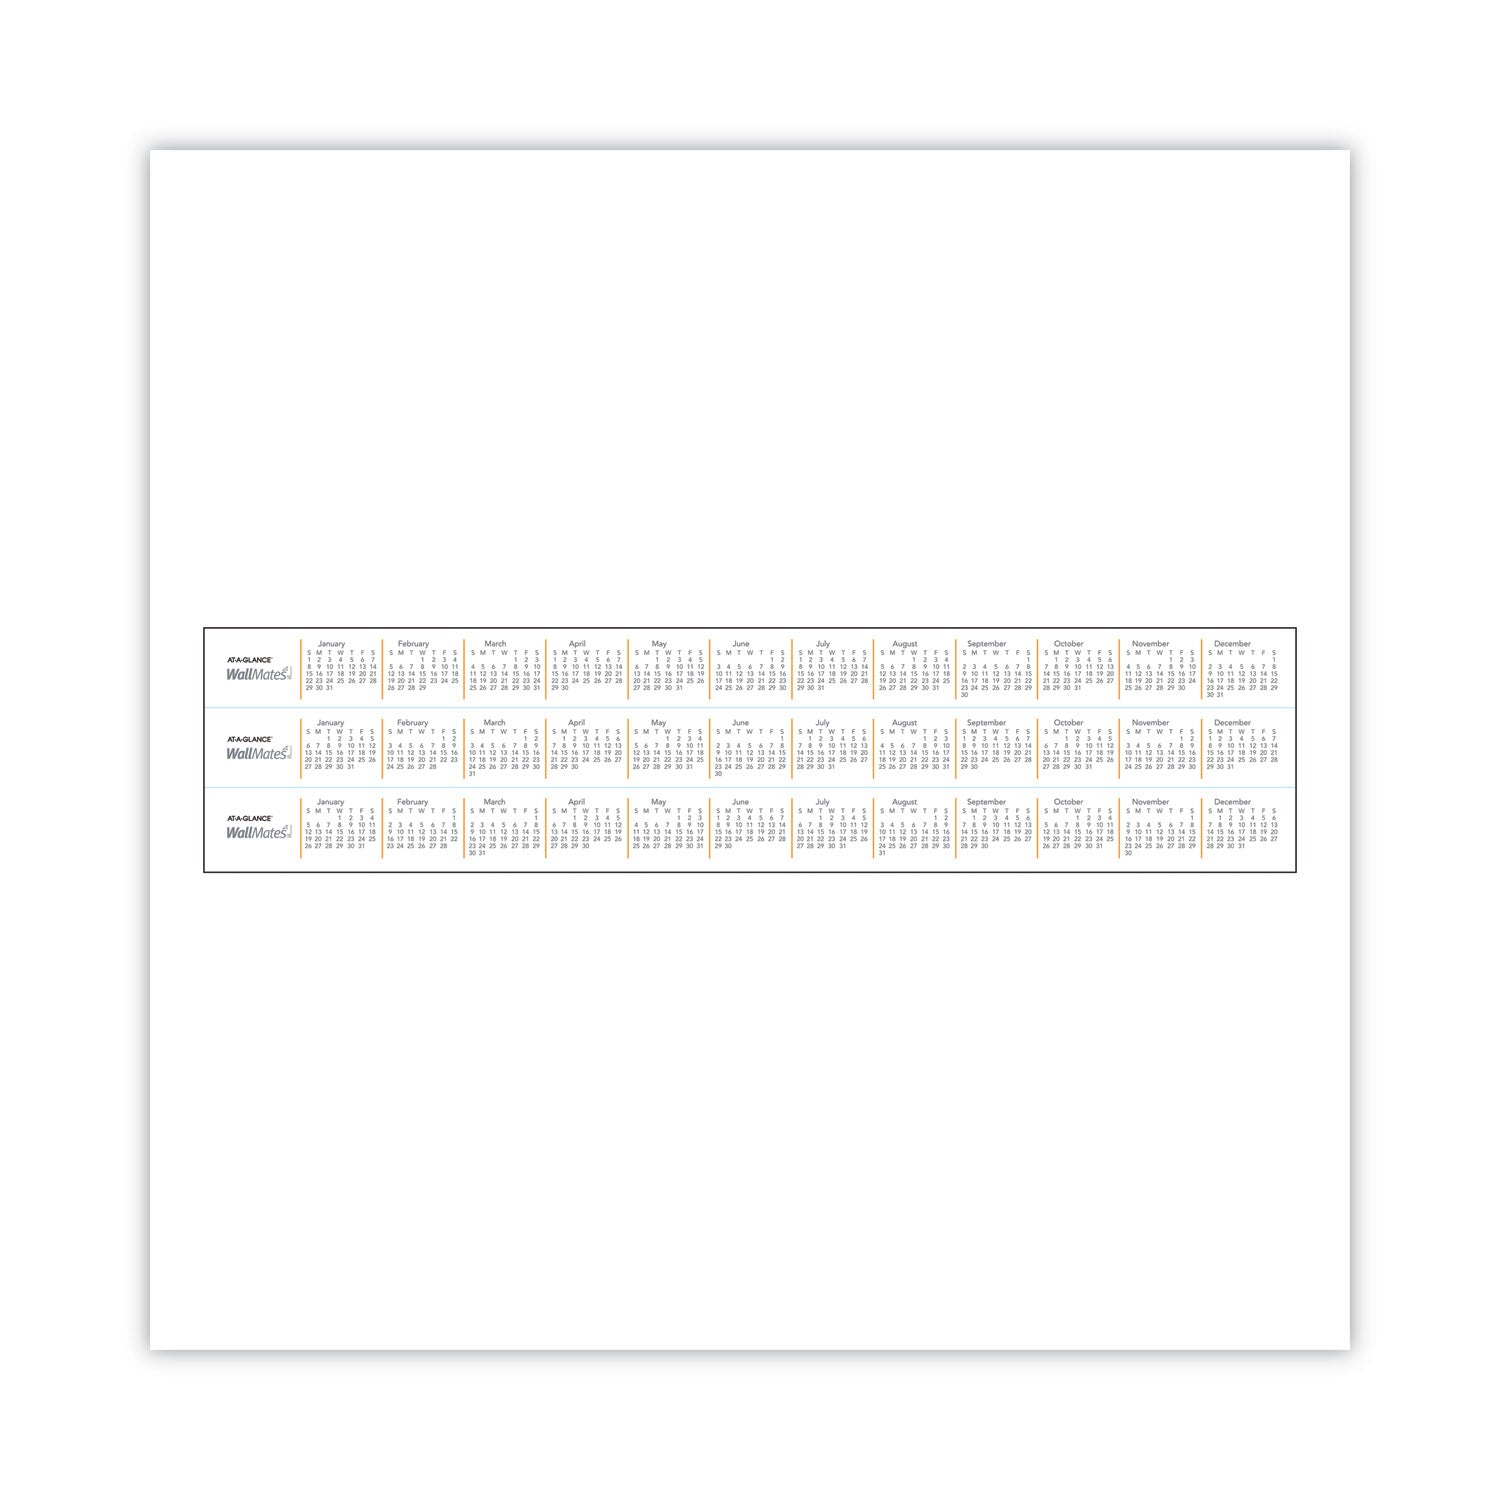 WallMates Self-Adhesive Dry Erase Weekly Planning Surfaces, 18 x 24, White/Gray/Orange Sheets, Undated - 